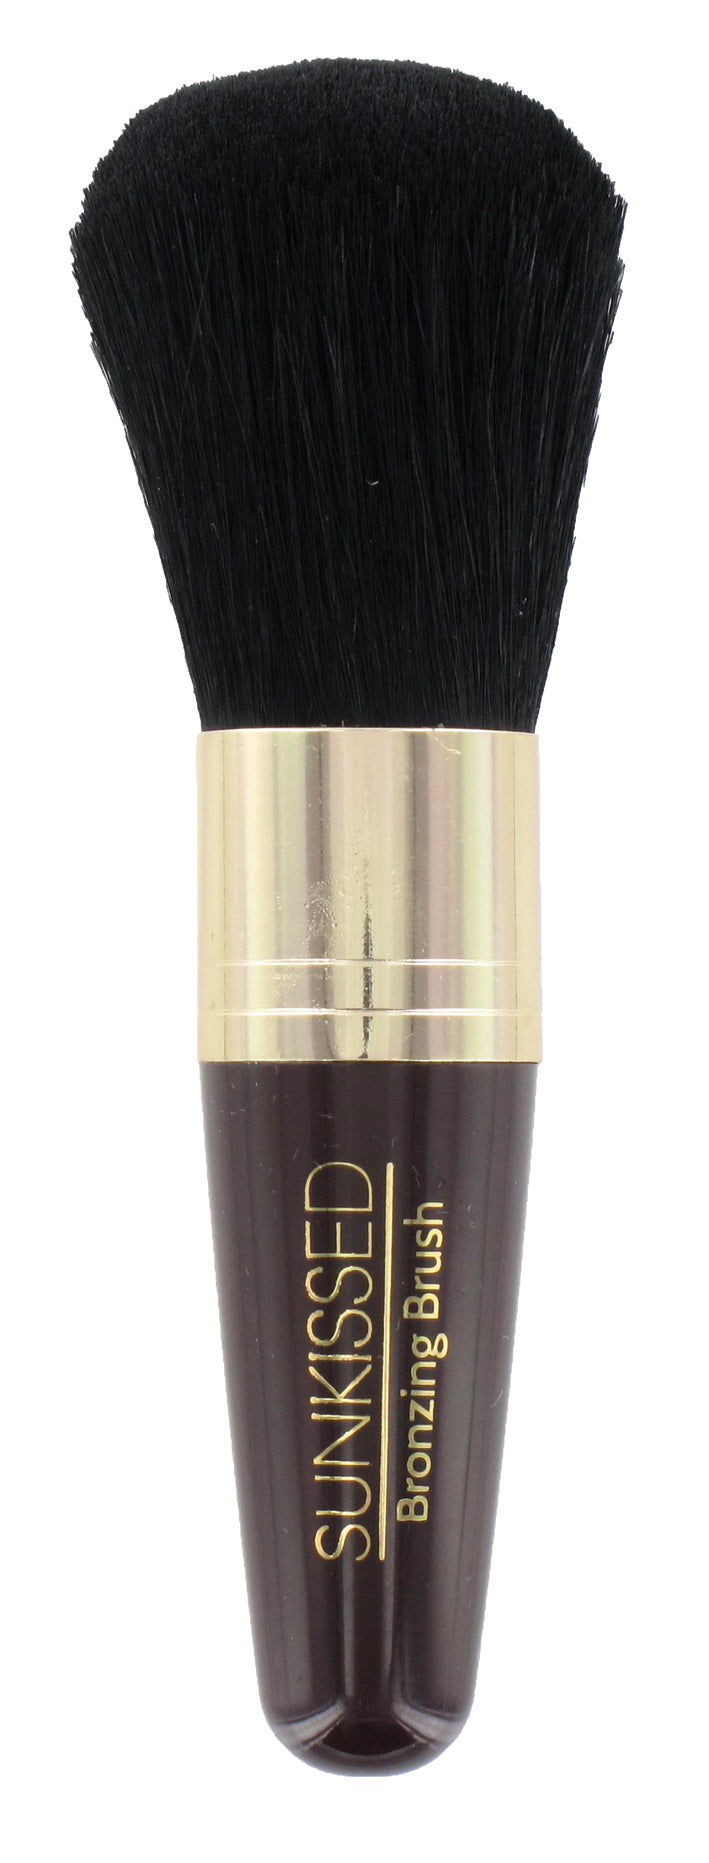 Sunkissed Cosmetics Bronzing Brush One Size